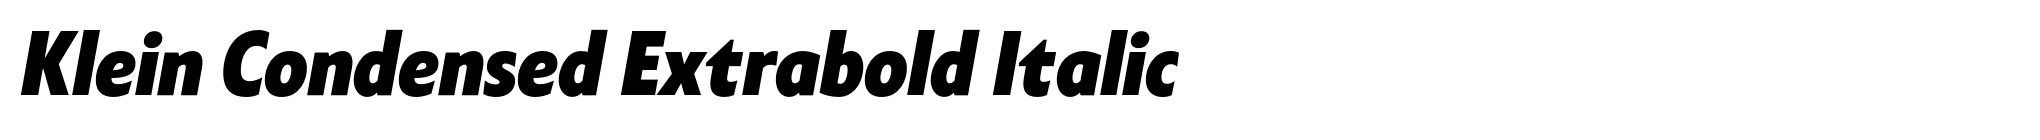 Klein Condensed Extrabold Italic image